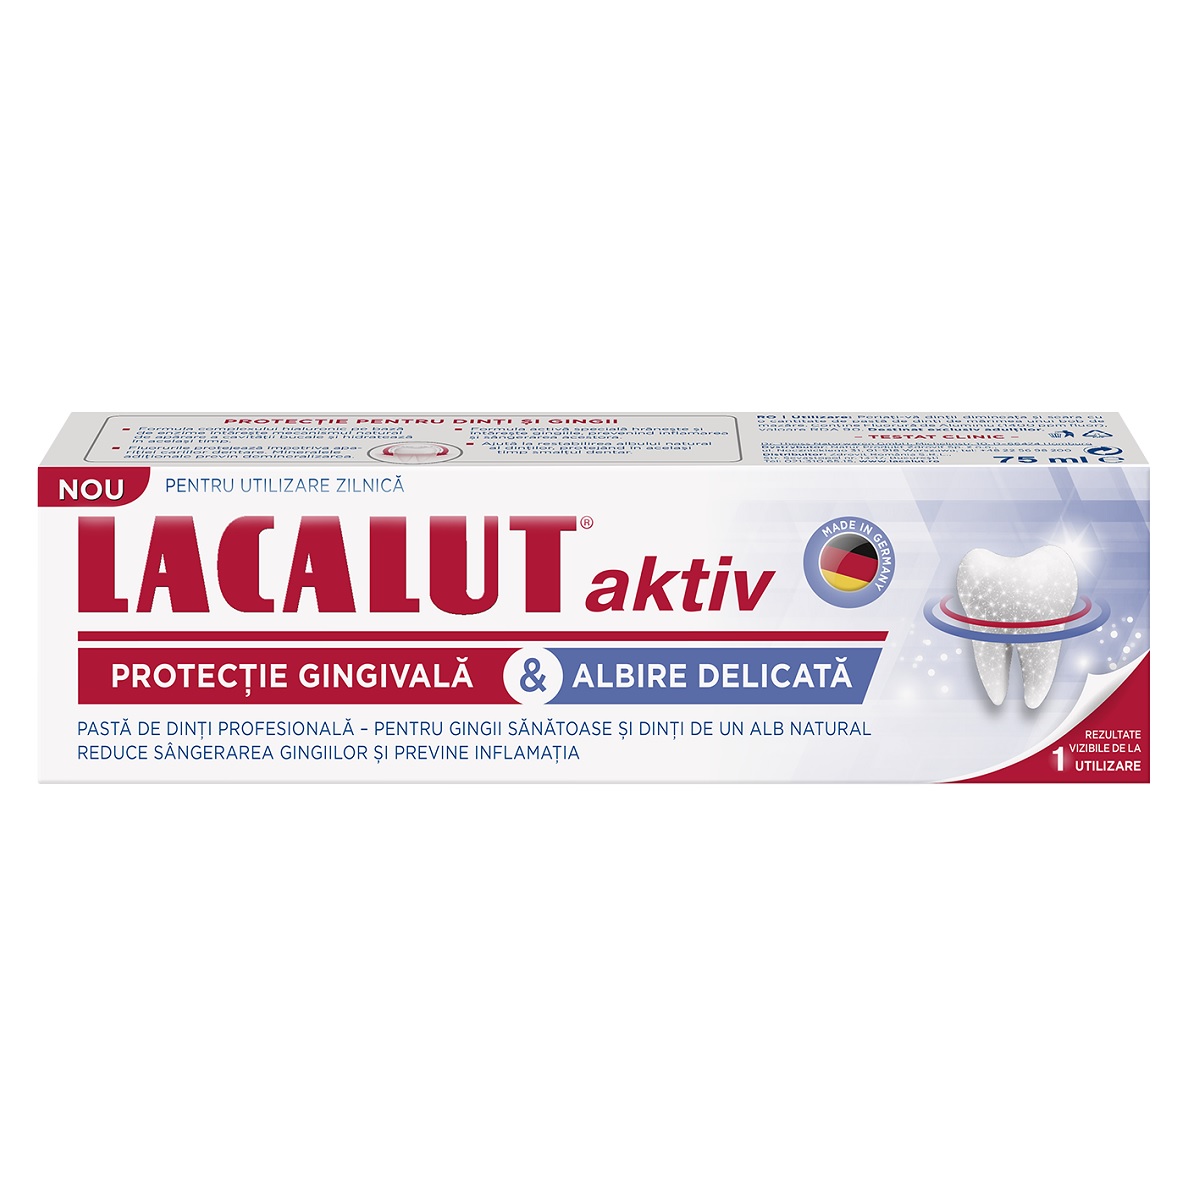 Pasta de dinti pentru protectie gingivala si albire delicata Aktiv, 75 ml, Lacalut